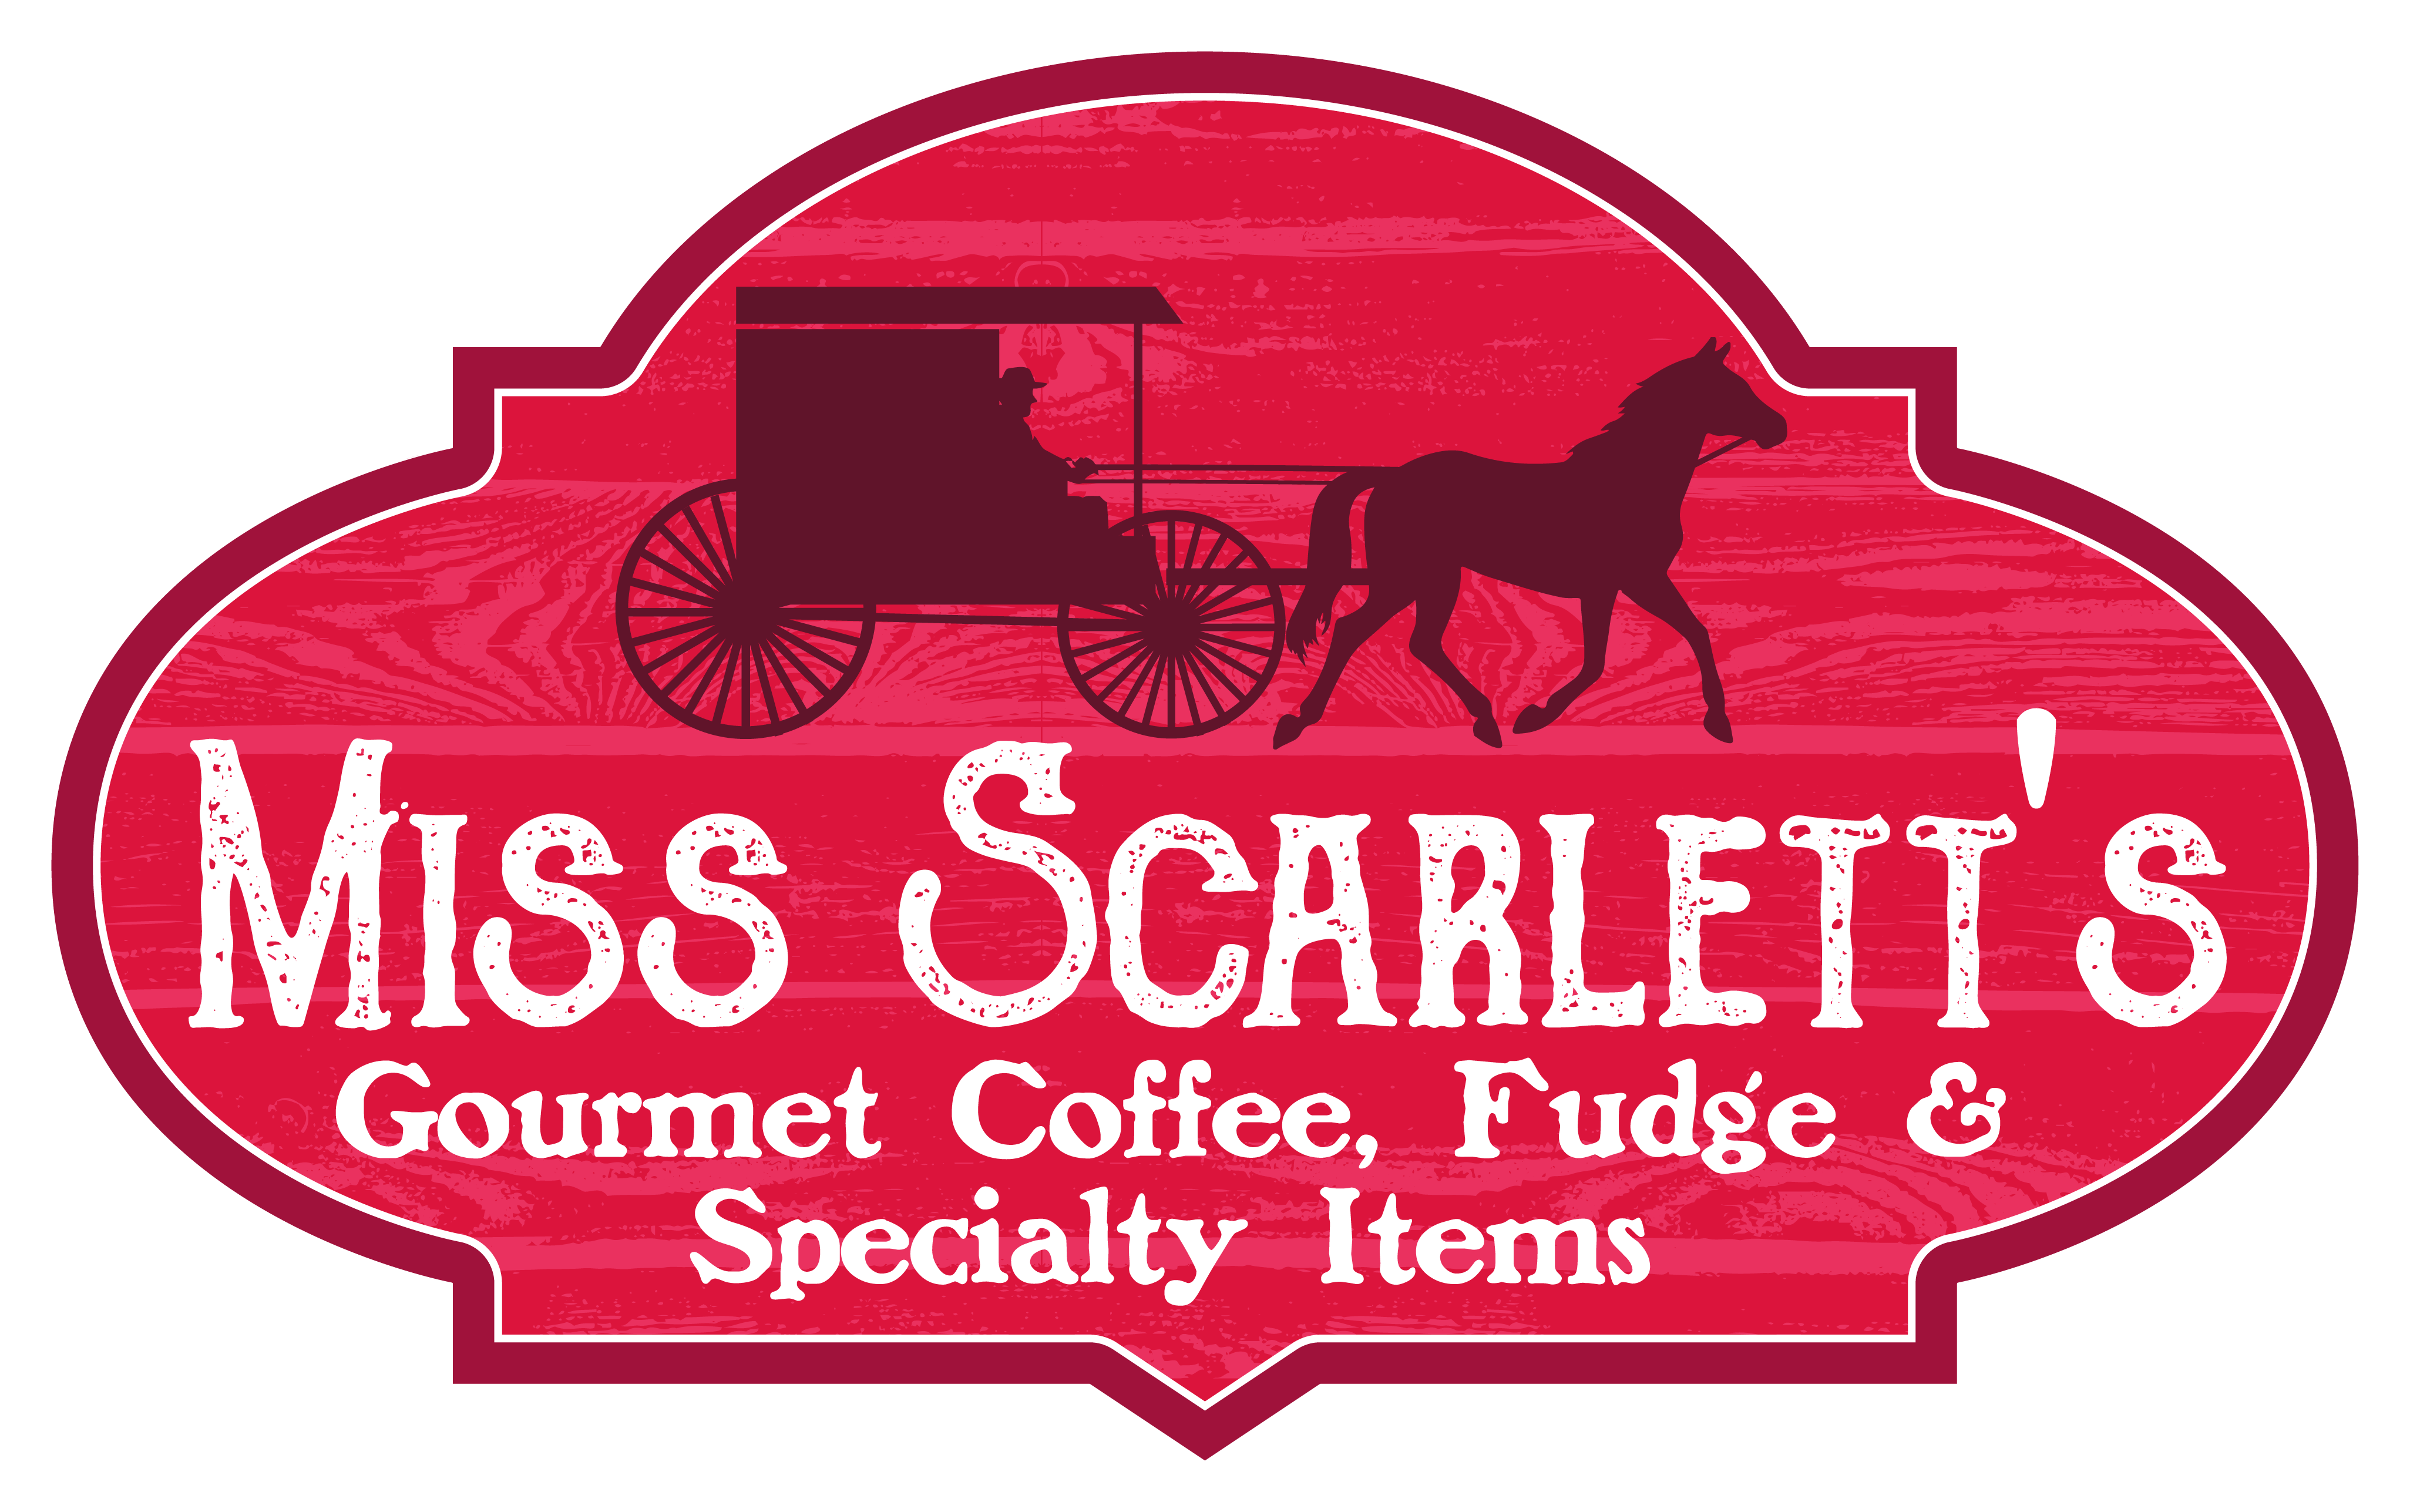 Miss Scarlett's logo